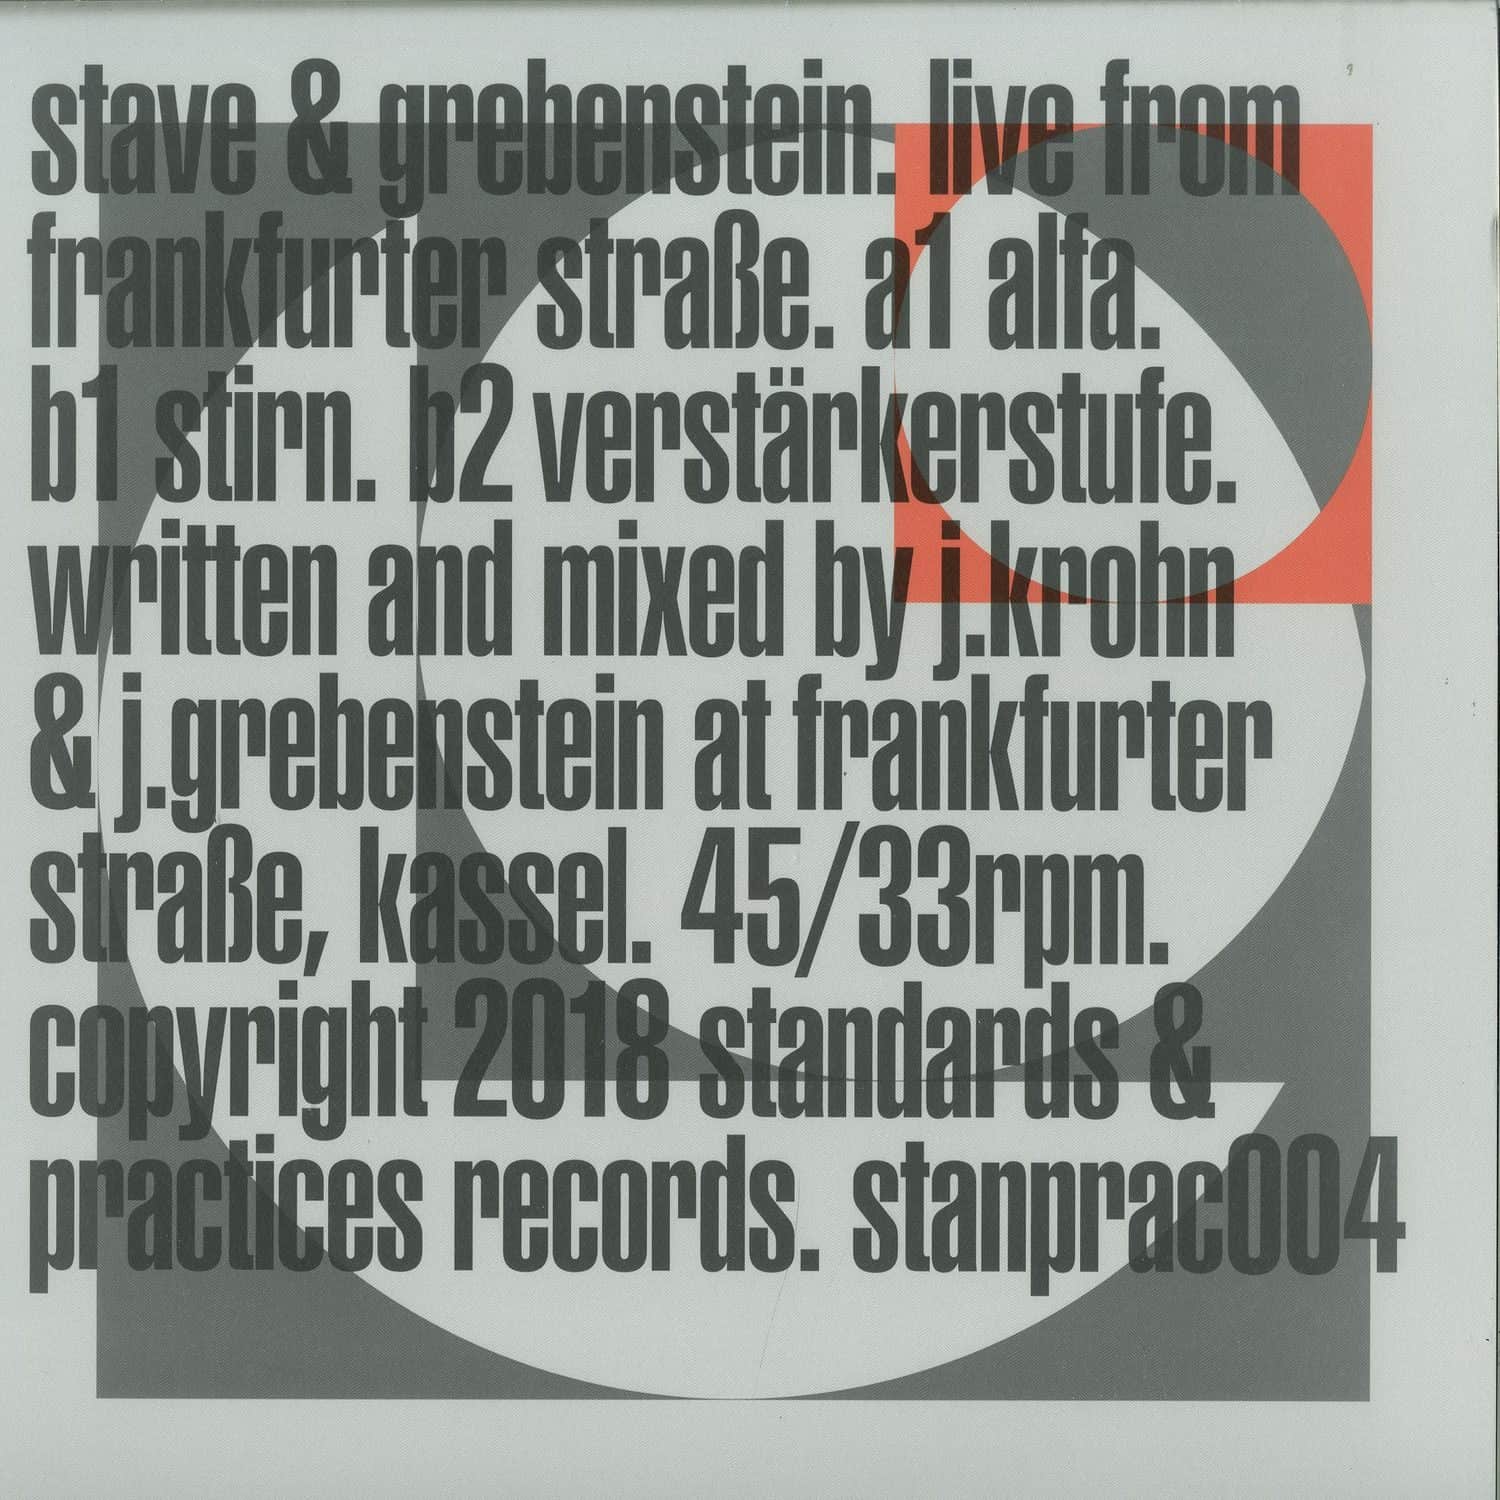 Stave & Grebenstein - LIVE FROM FRANKFURTER STRASSE